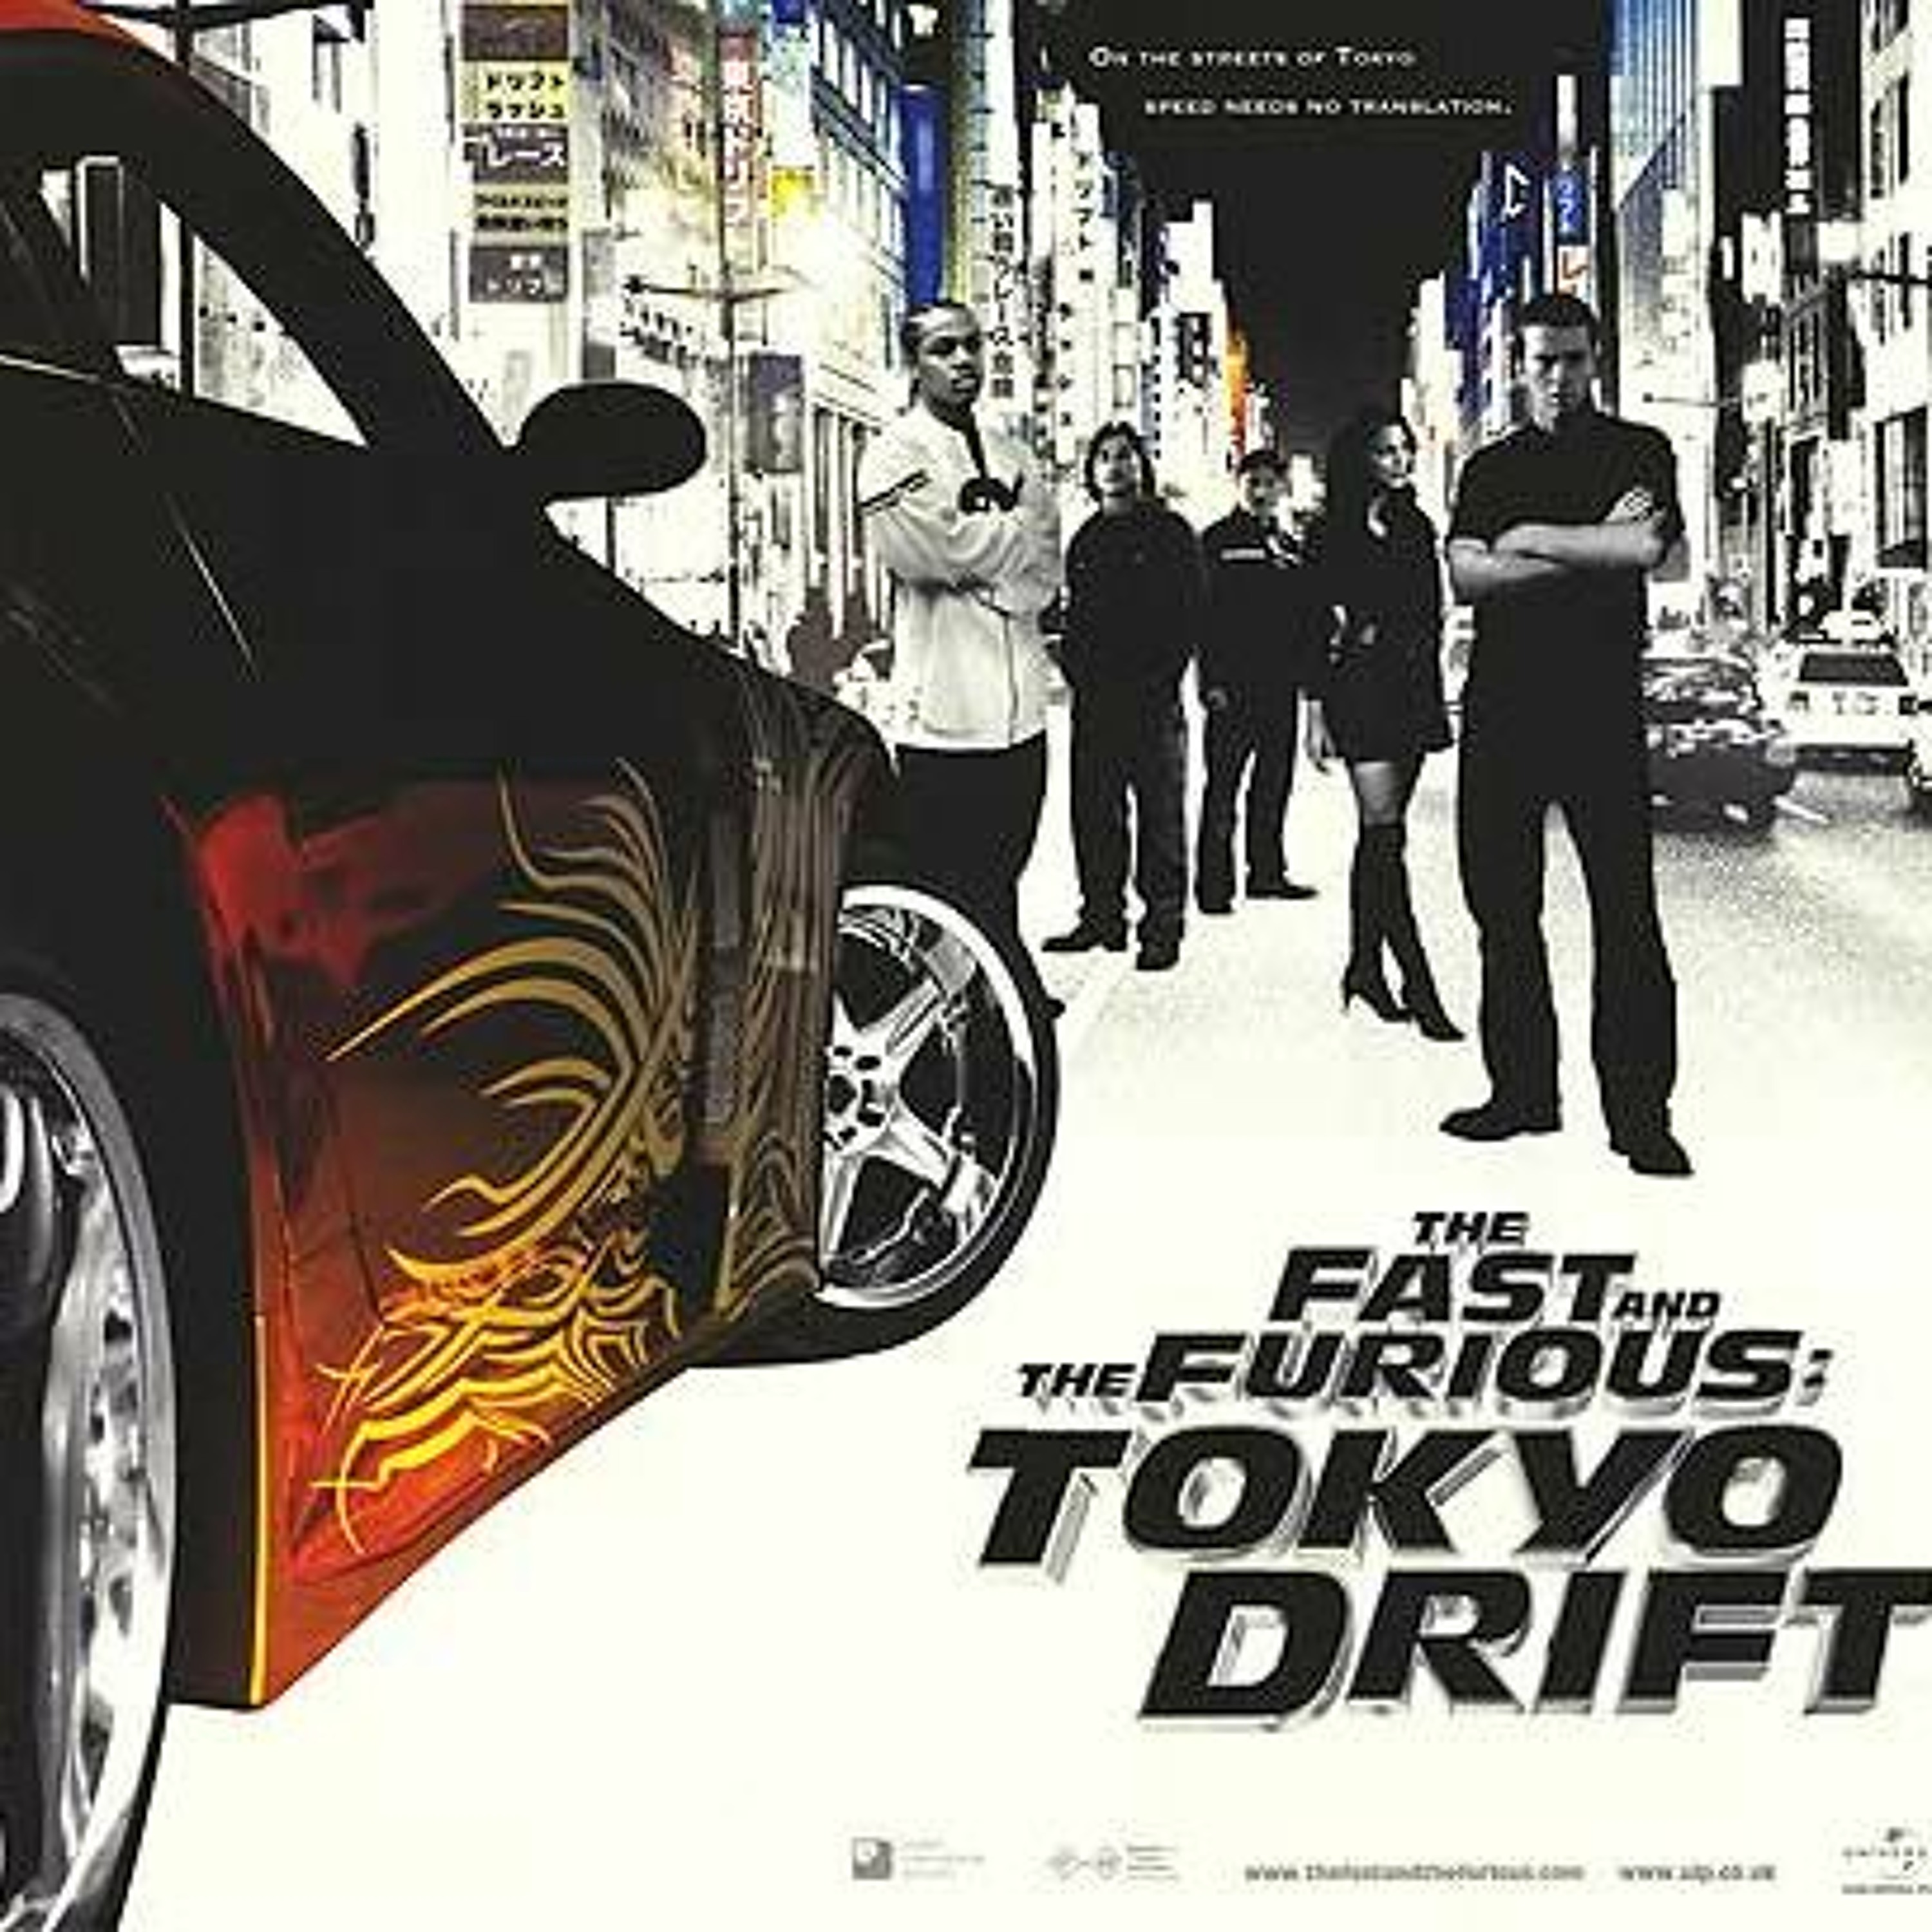 Track tokyo drift. Тройной Форсаж: Токийский дрифт (2006) Постер. Тройной Форсаж Токийский дрифт Постер.